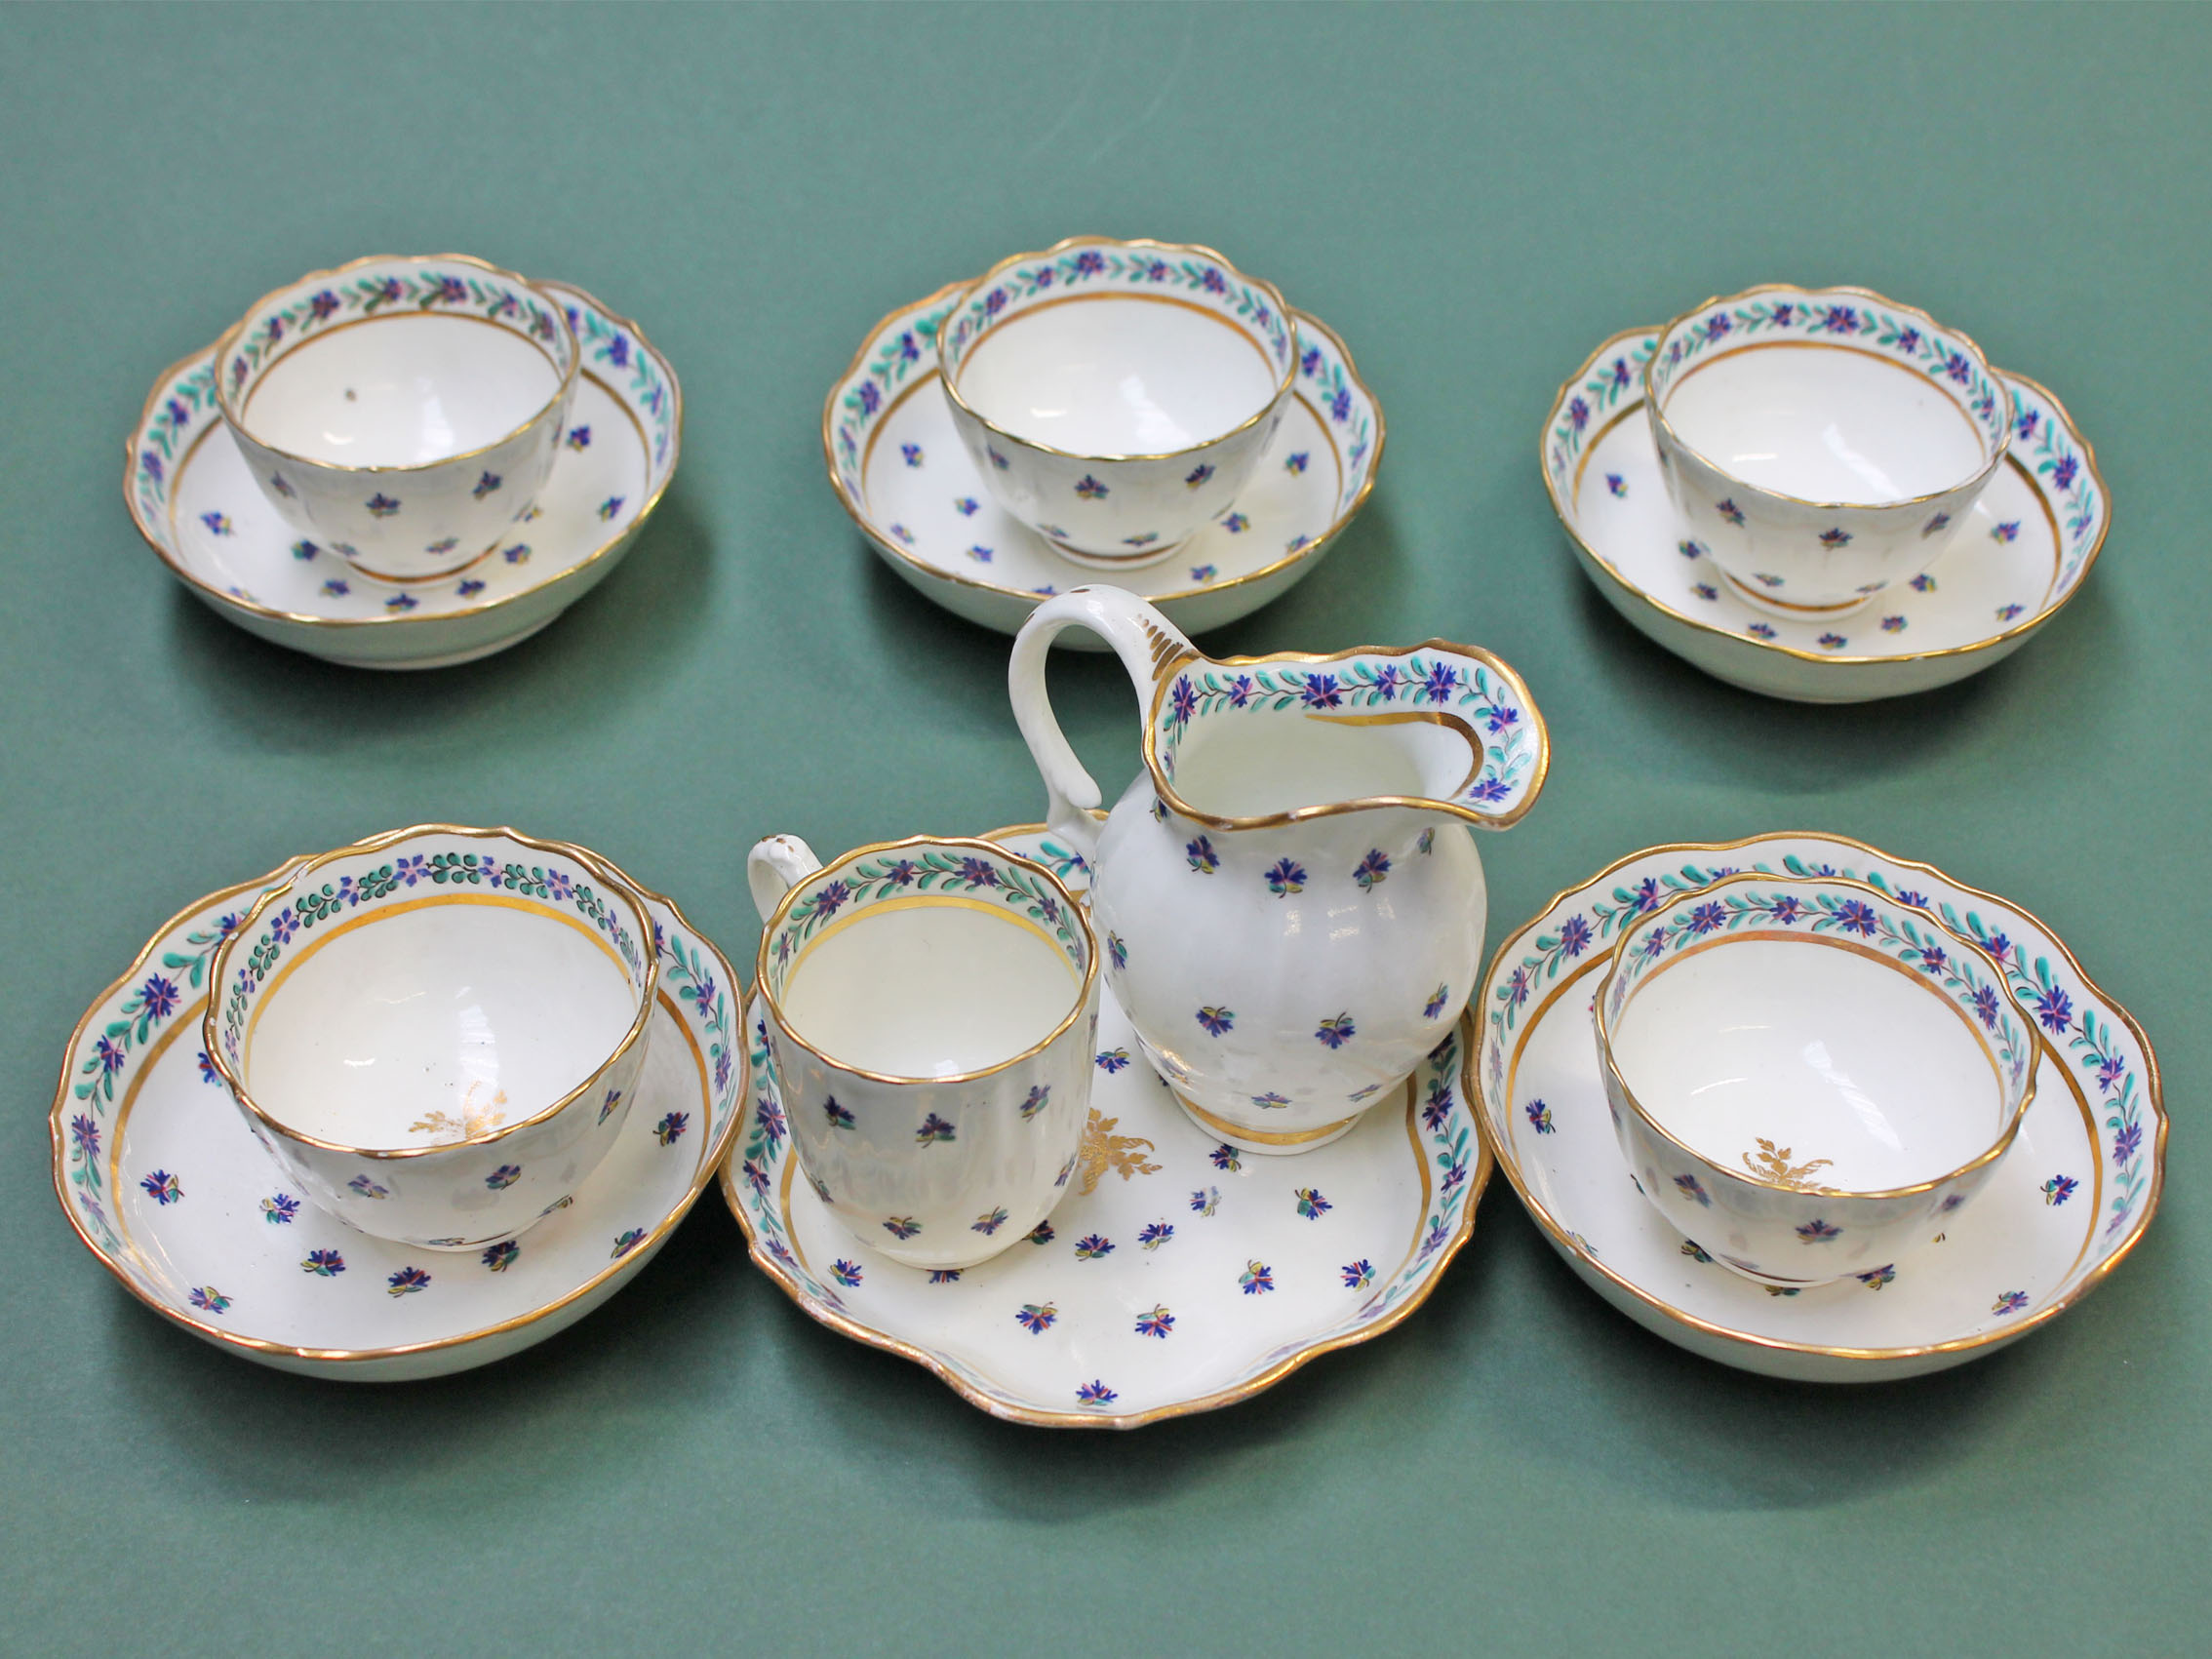 An English porcelain part tea set circa 1800 comprising five tea bowls and saucers, a cream jug, a - Image 2 of 2